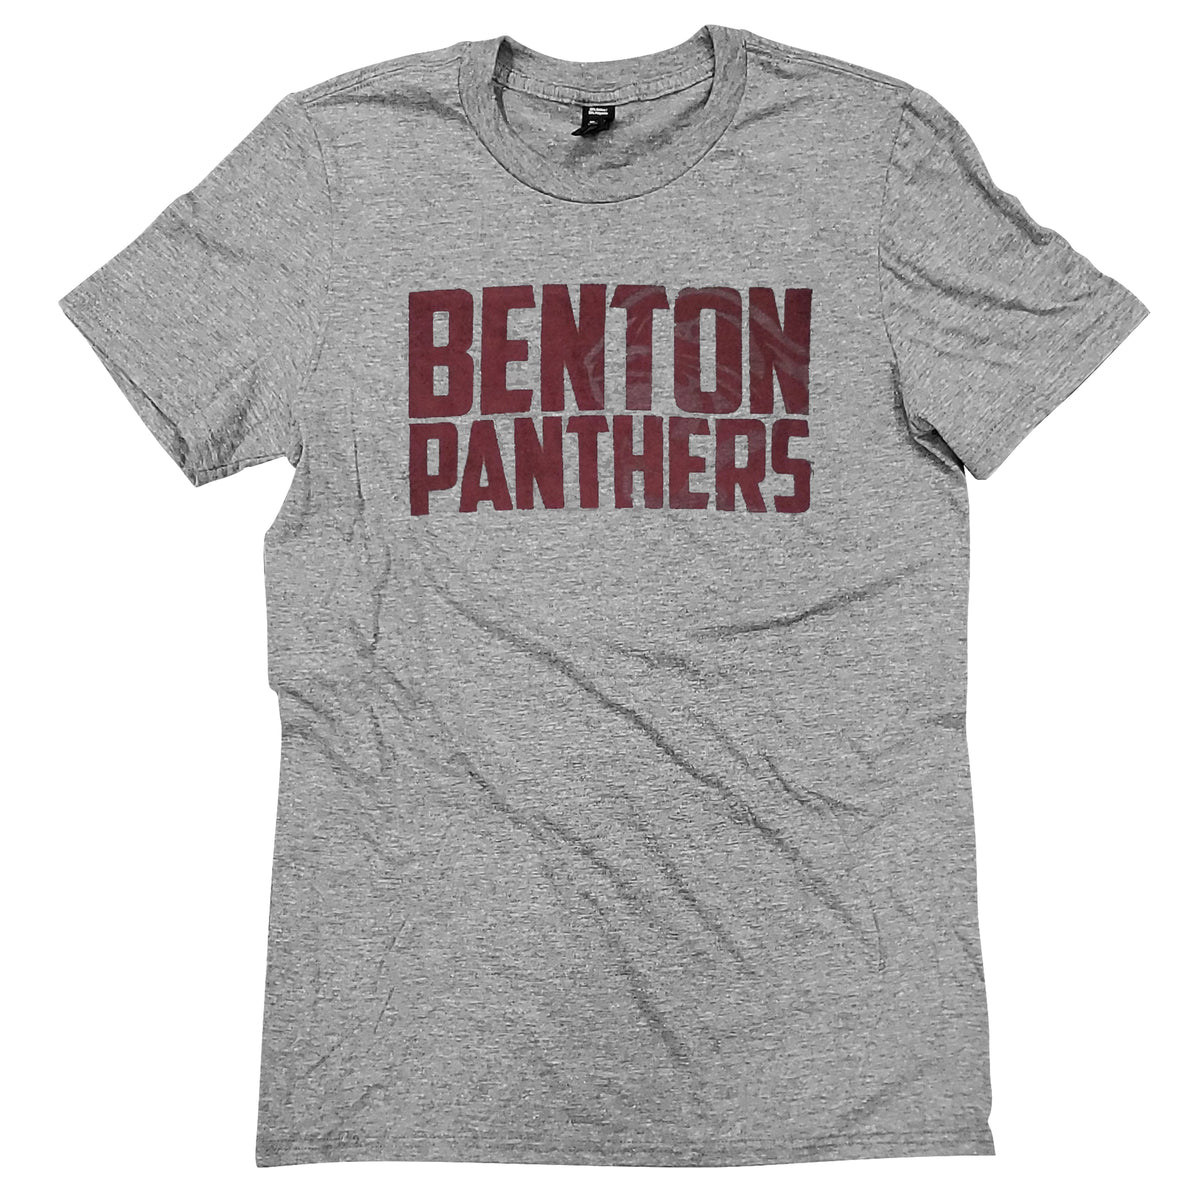 Benton Panthers tee